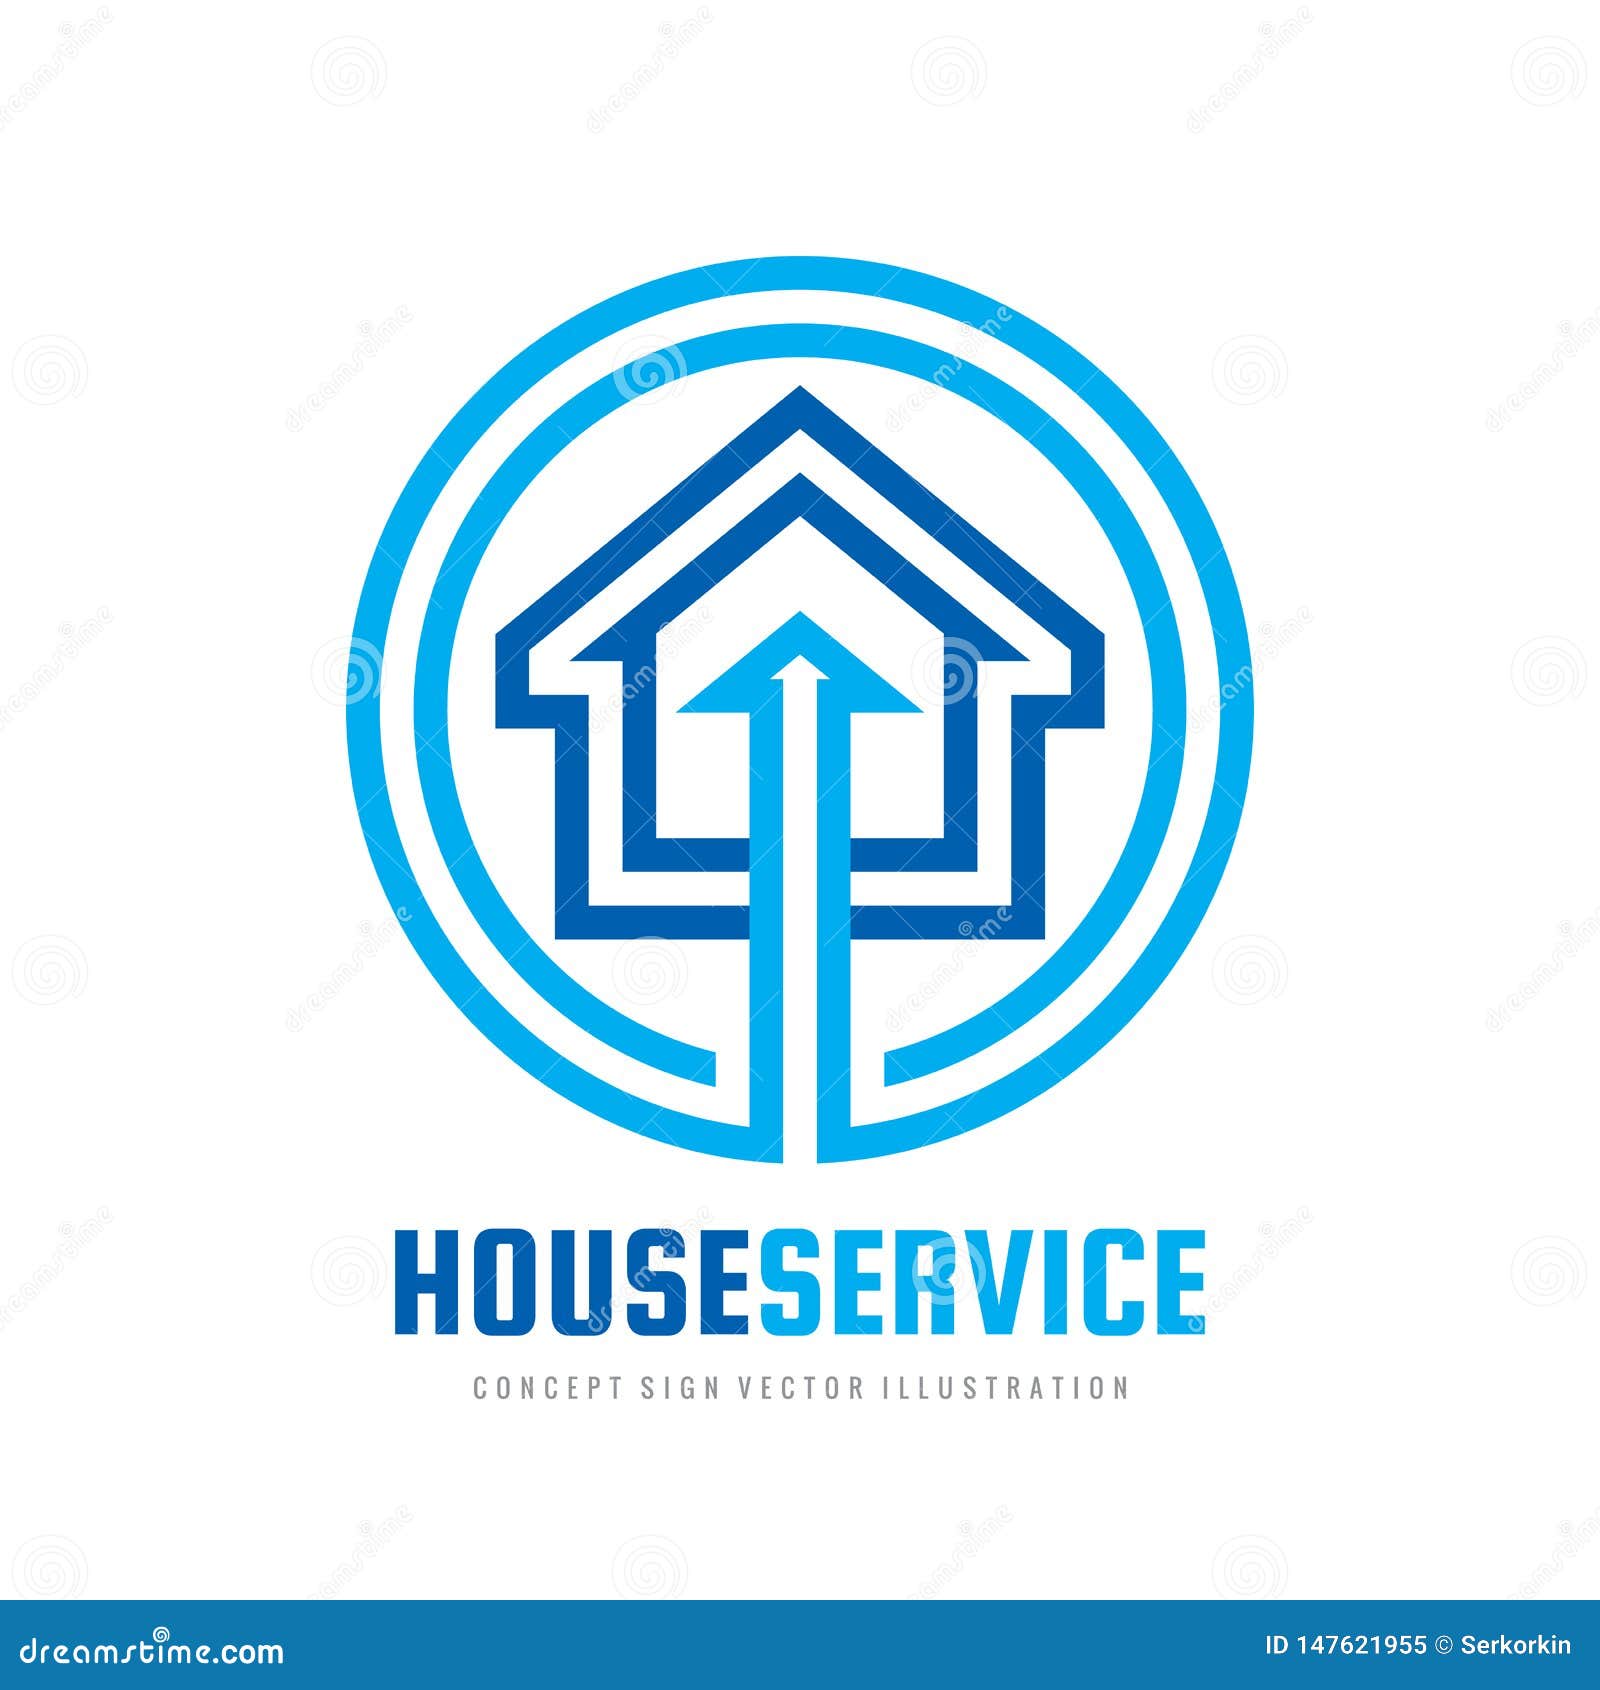 Smart House Logo Design Template. Build Vector Sign. Home Digital ...